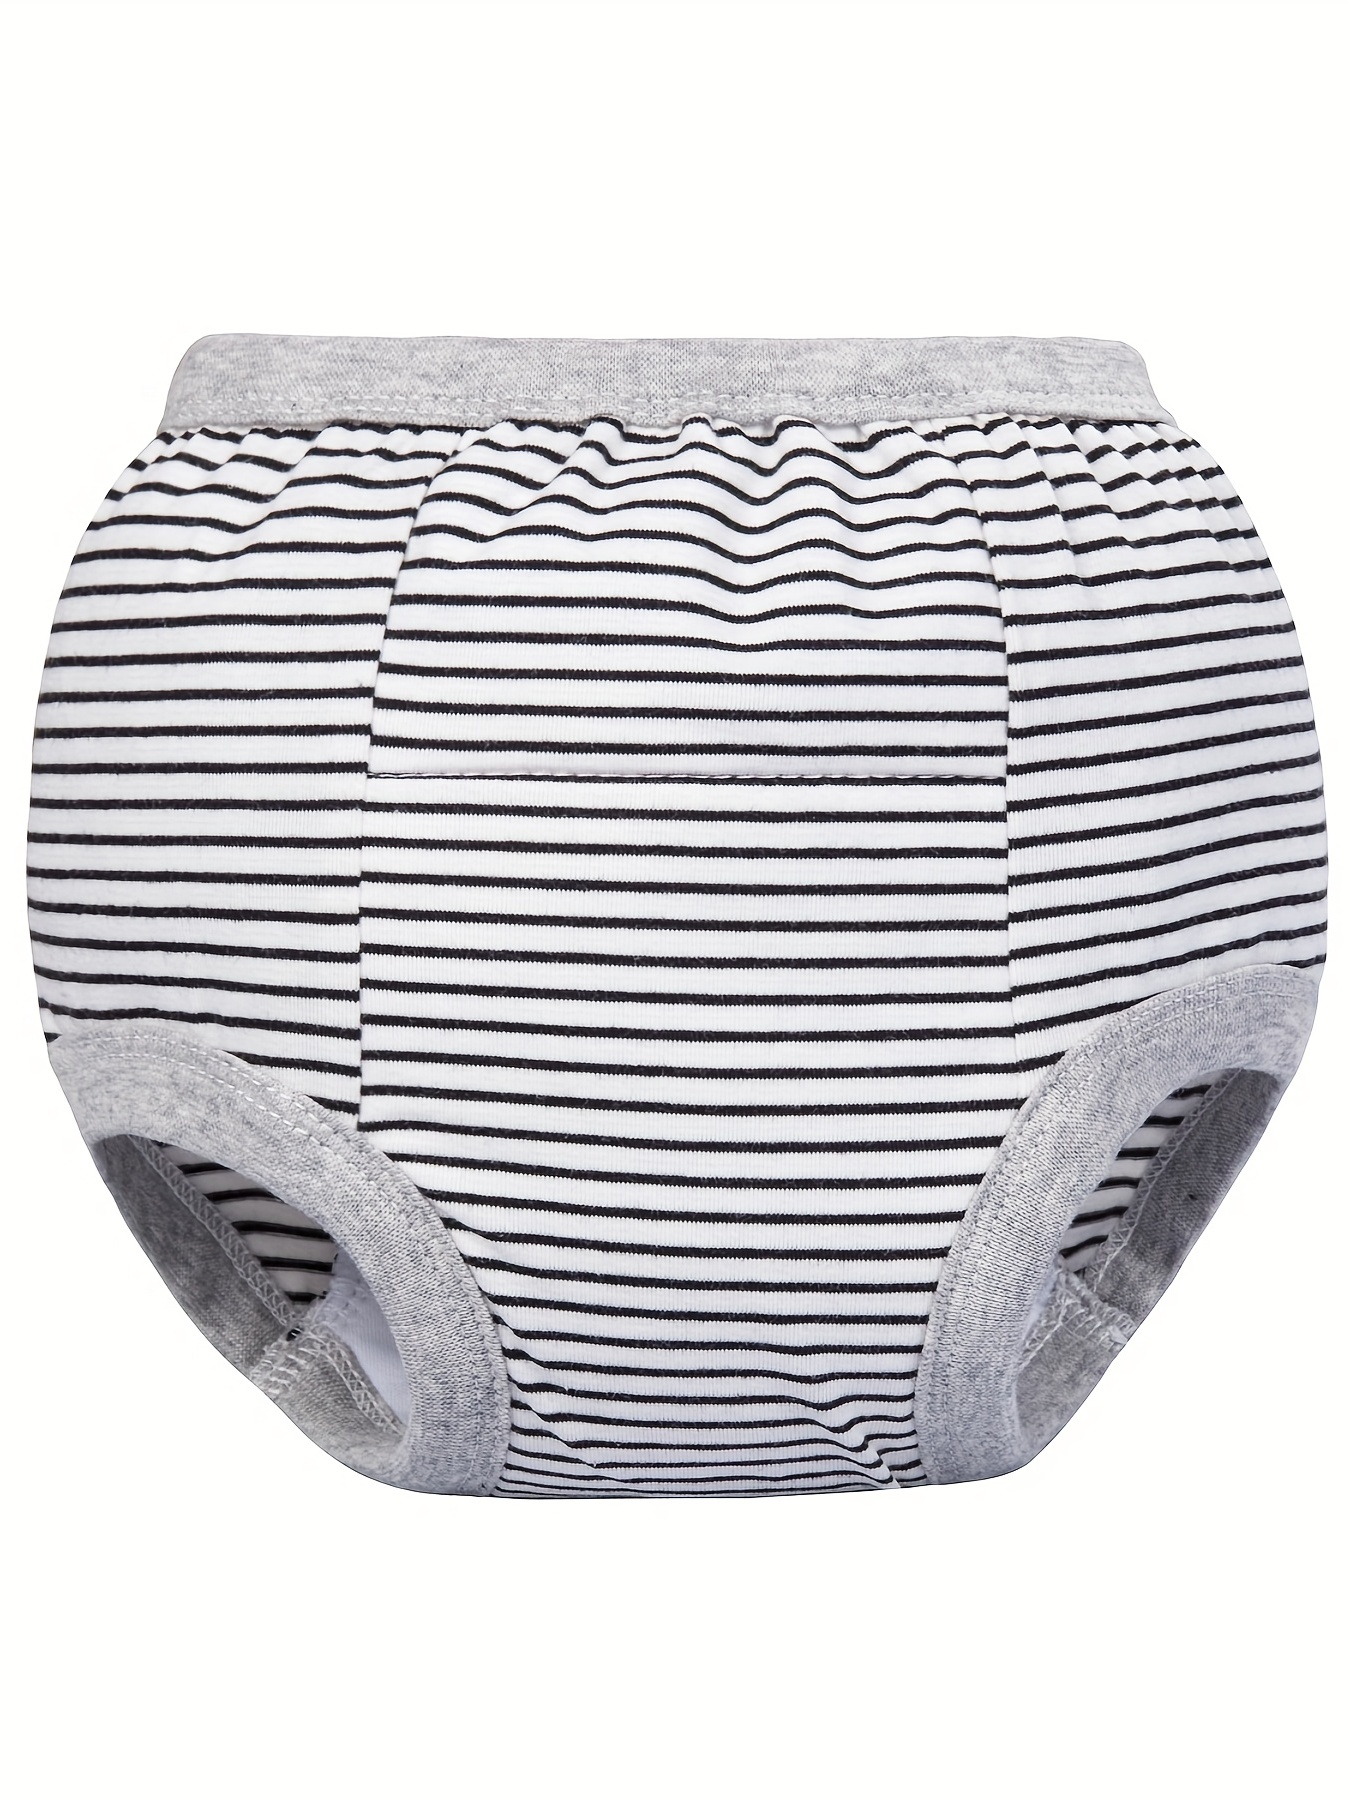 Grey Striped Potty Training Underwear